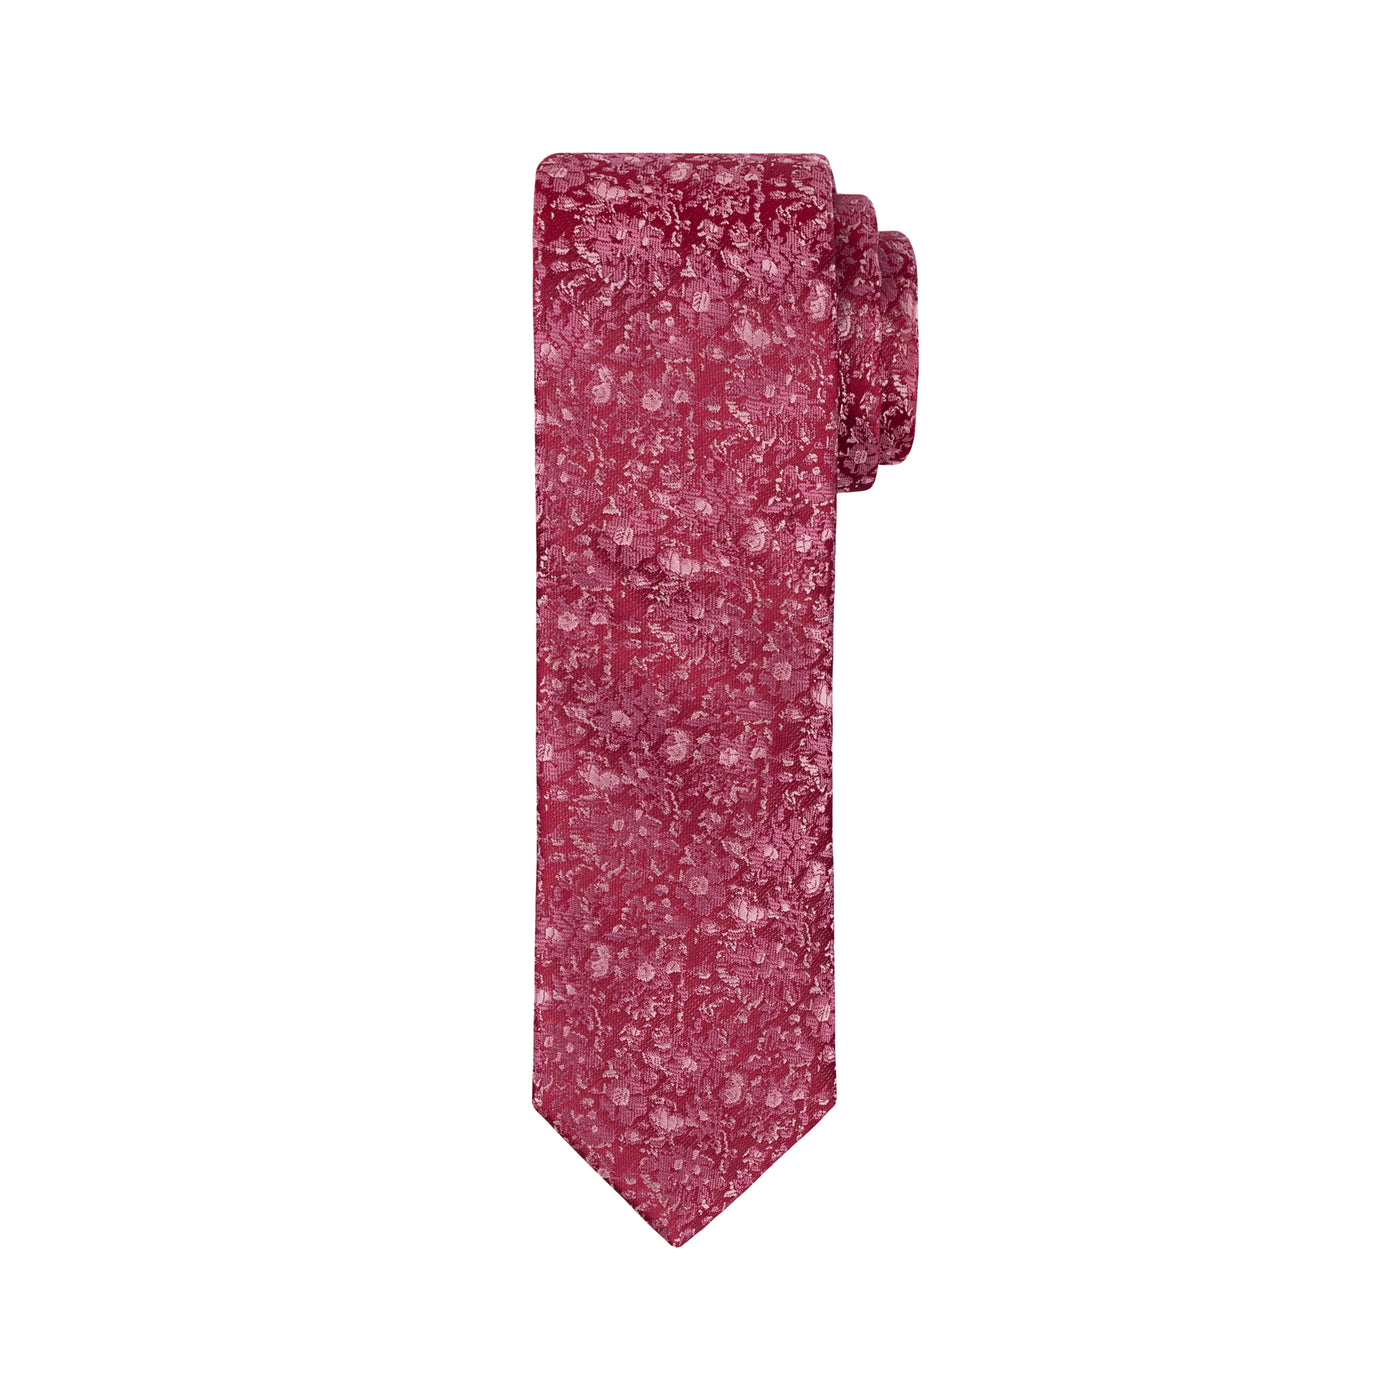 Rose Tie in Pink